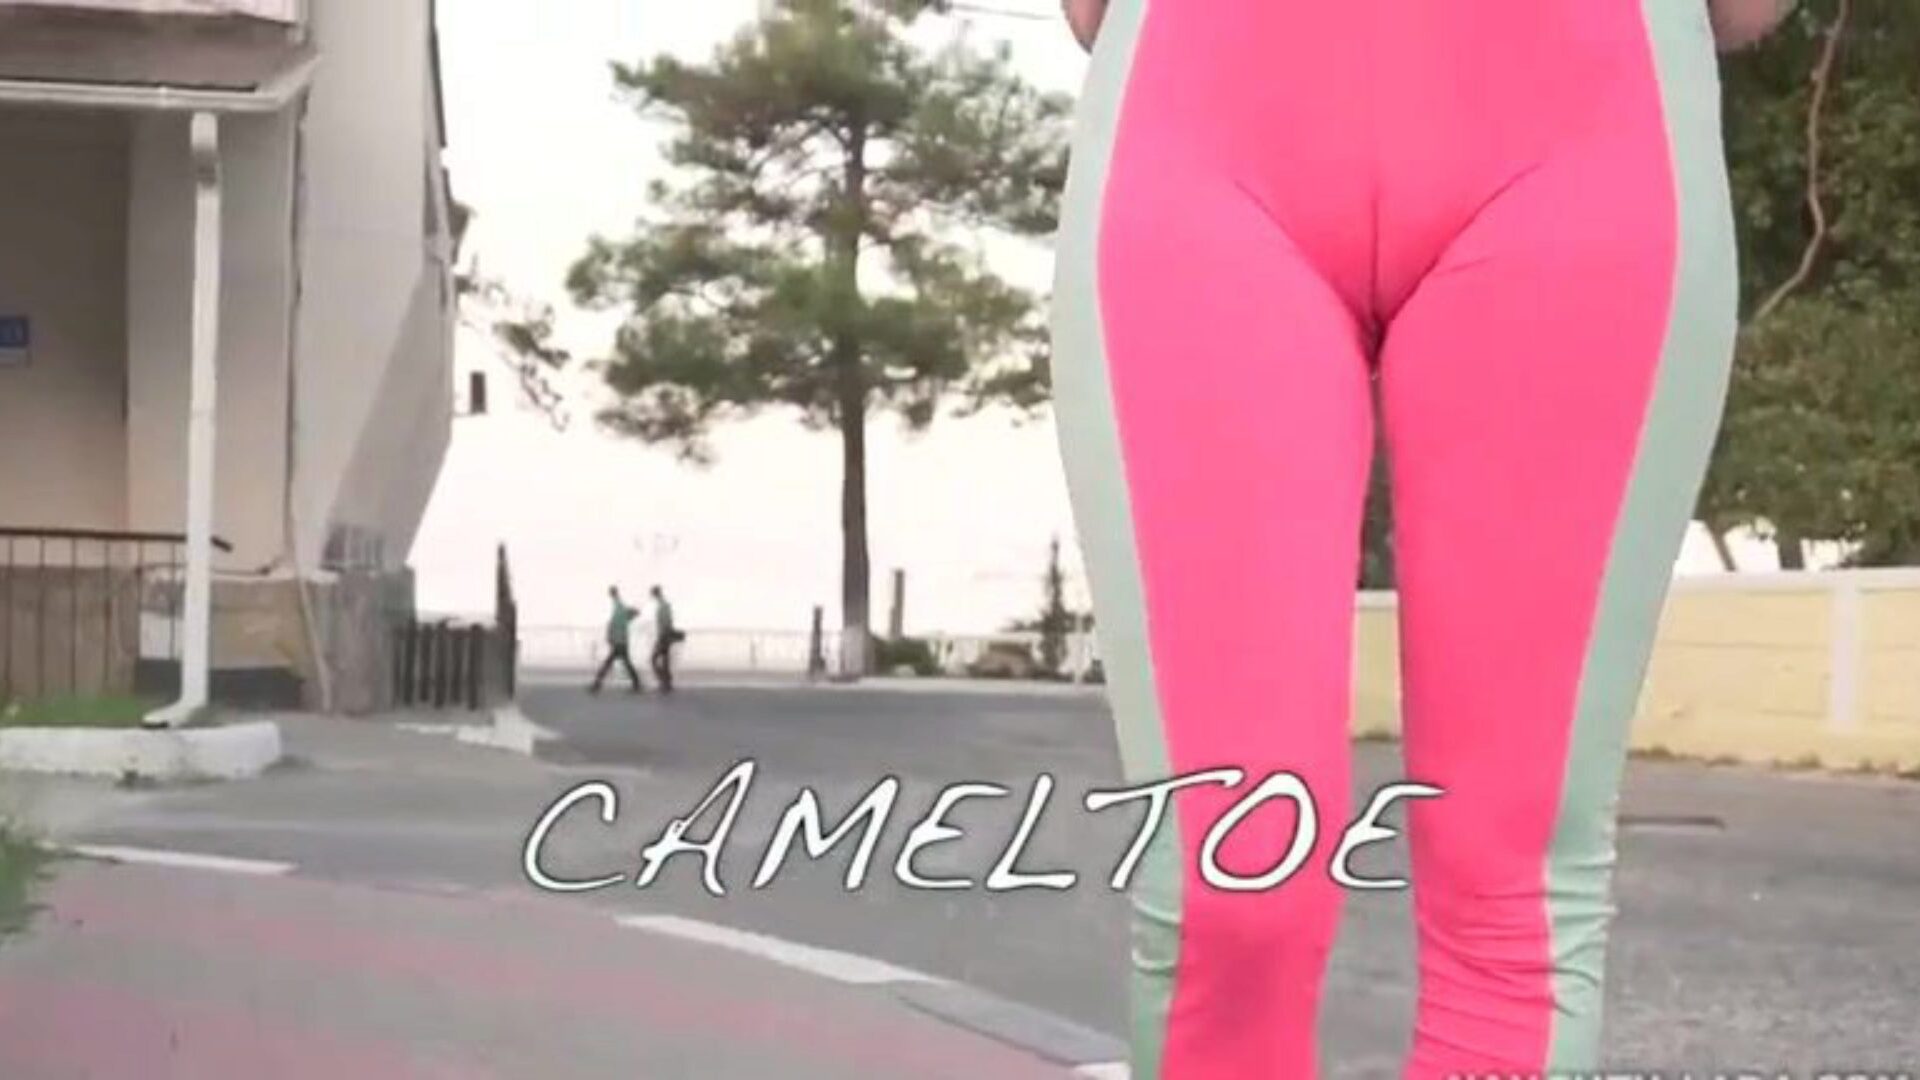 Cameltoe - I wore tight yoga pants in public